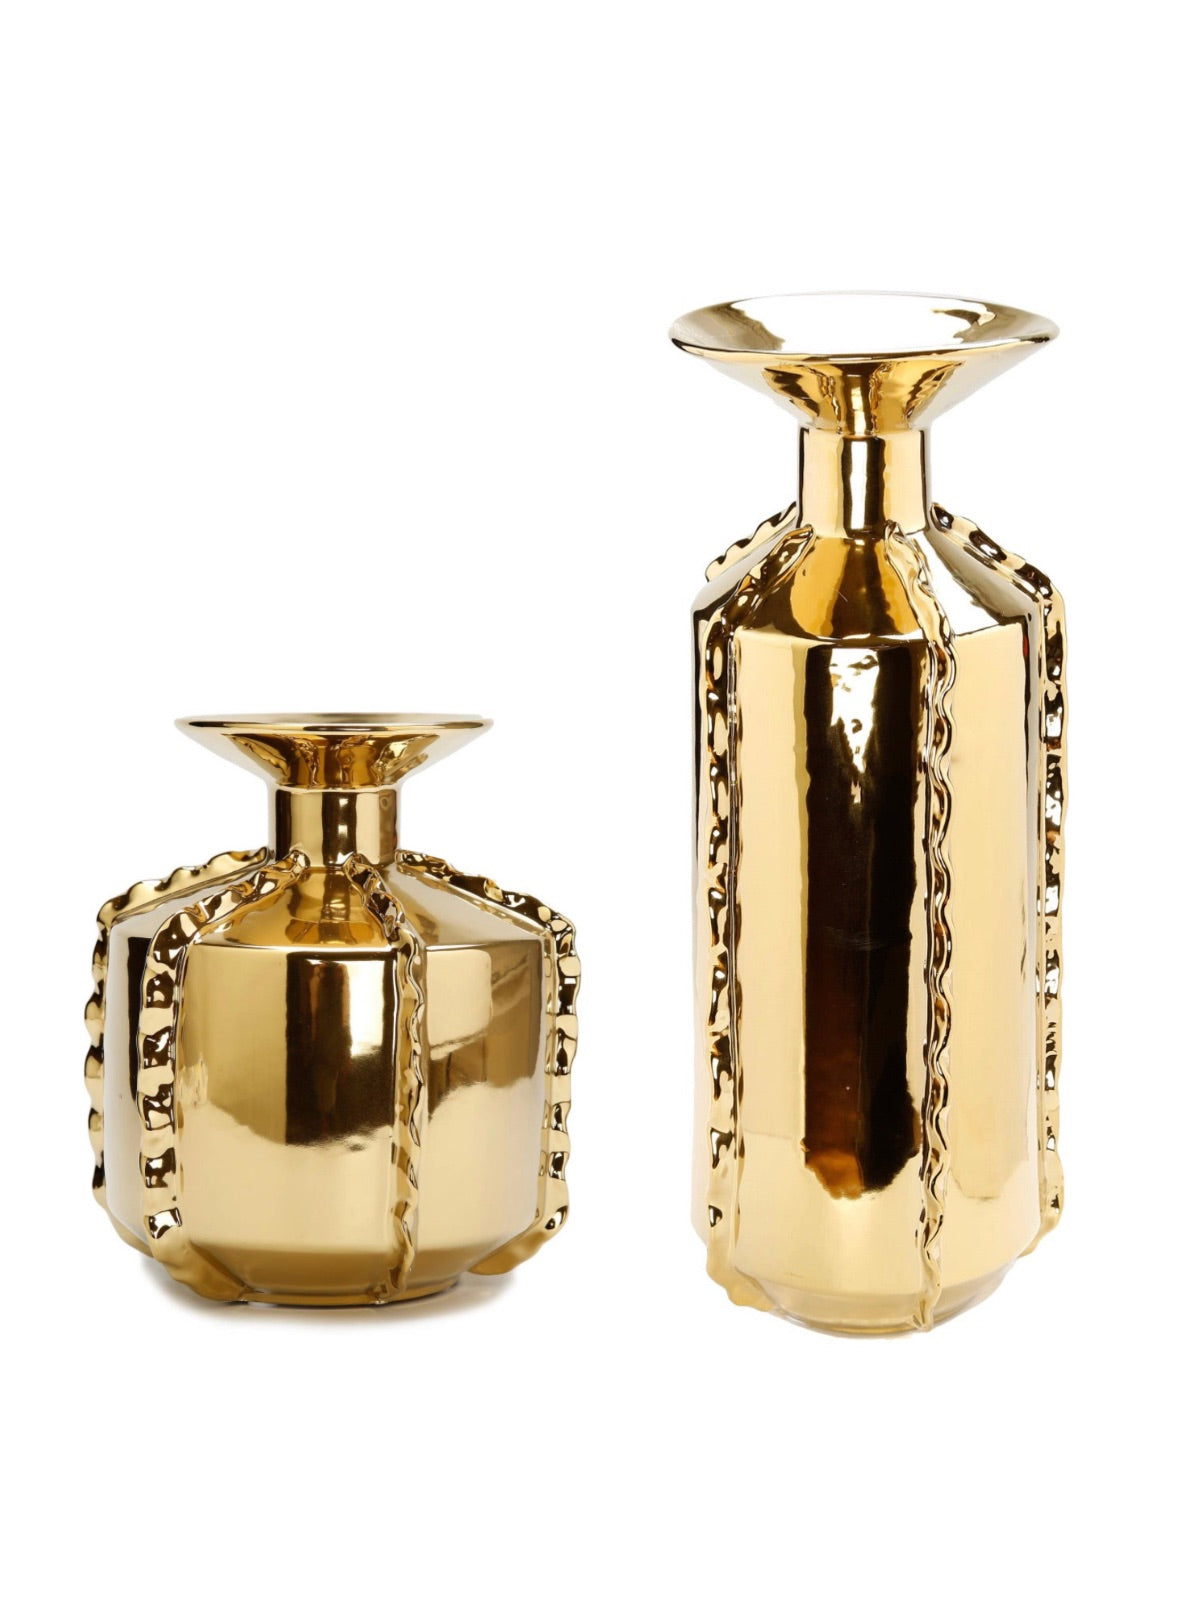 Gold Metallic Decorative Vase With Luxury Ruffle Design, 2 Sizes - KYA Home Decor 